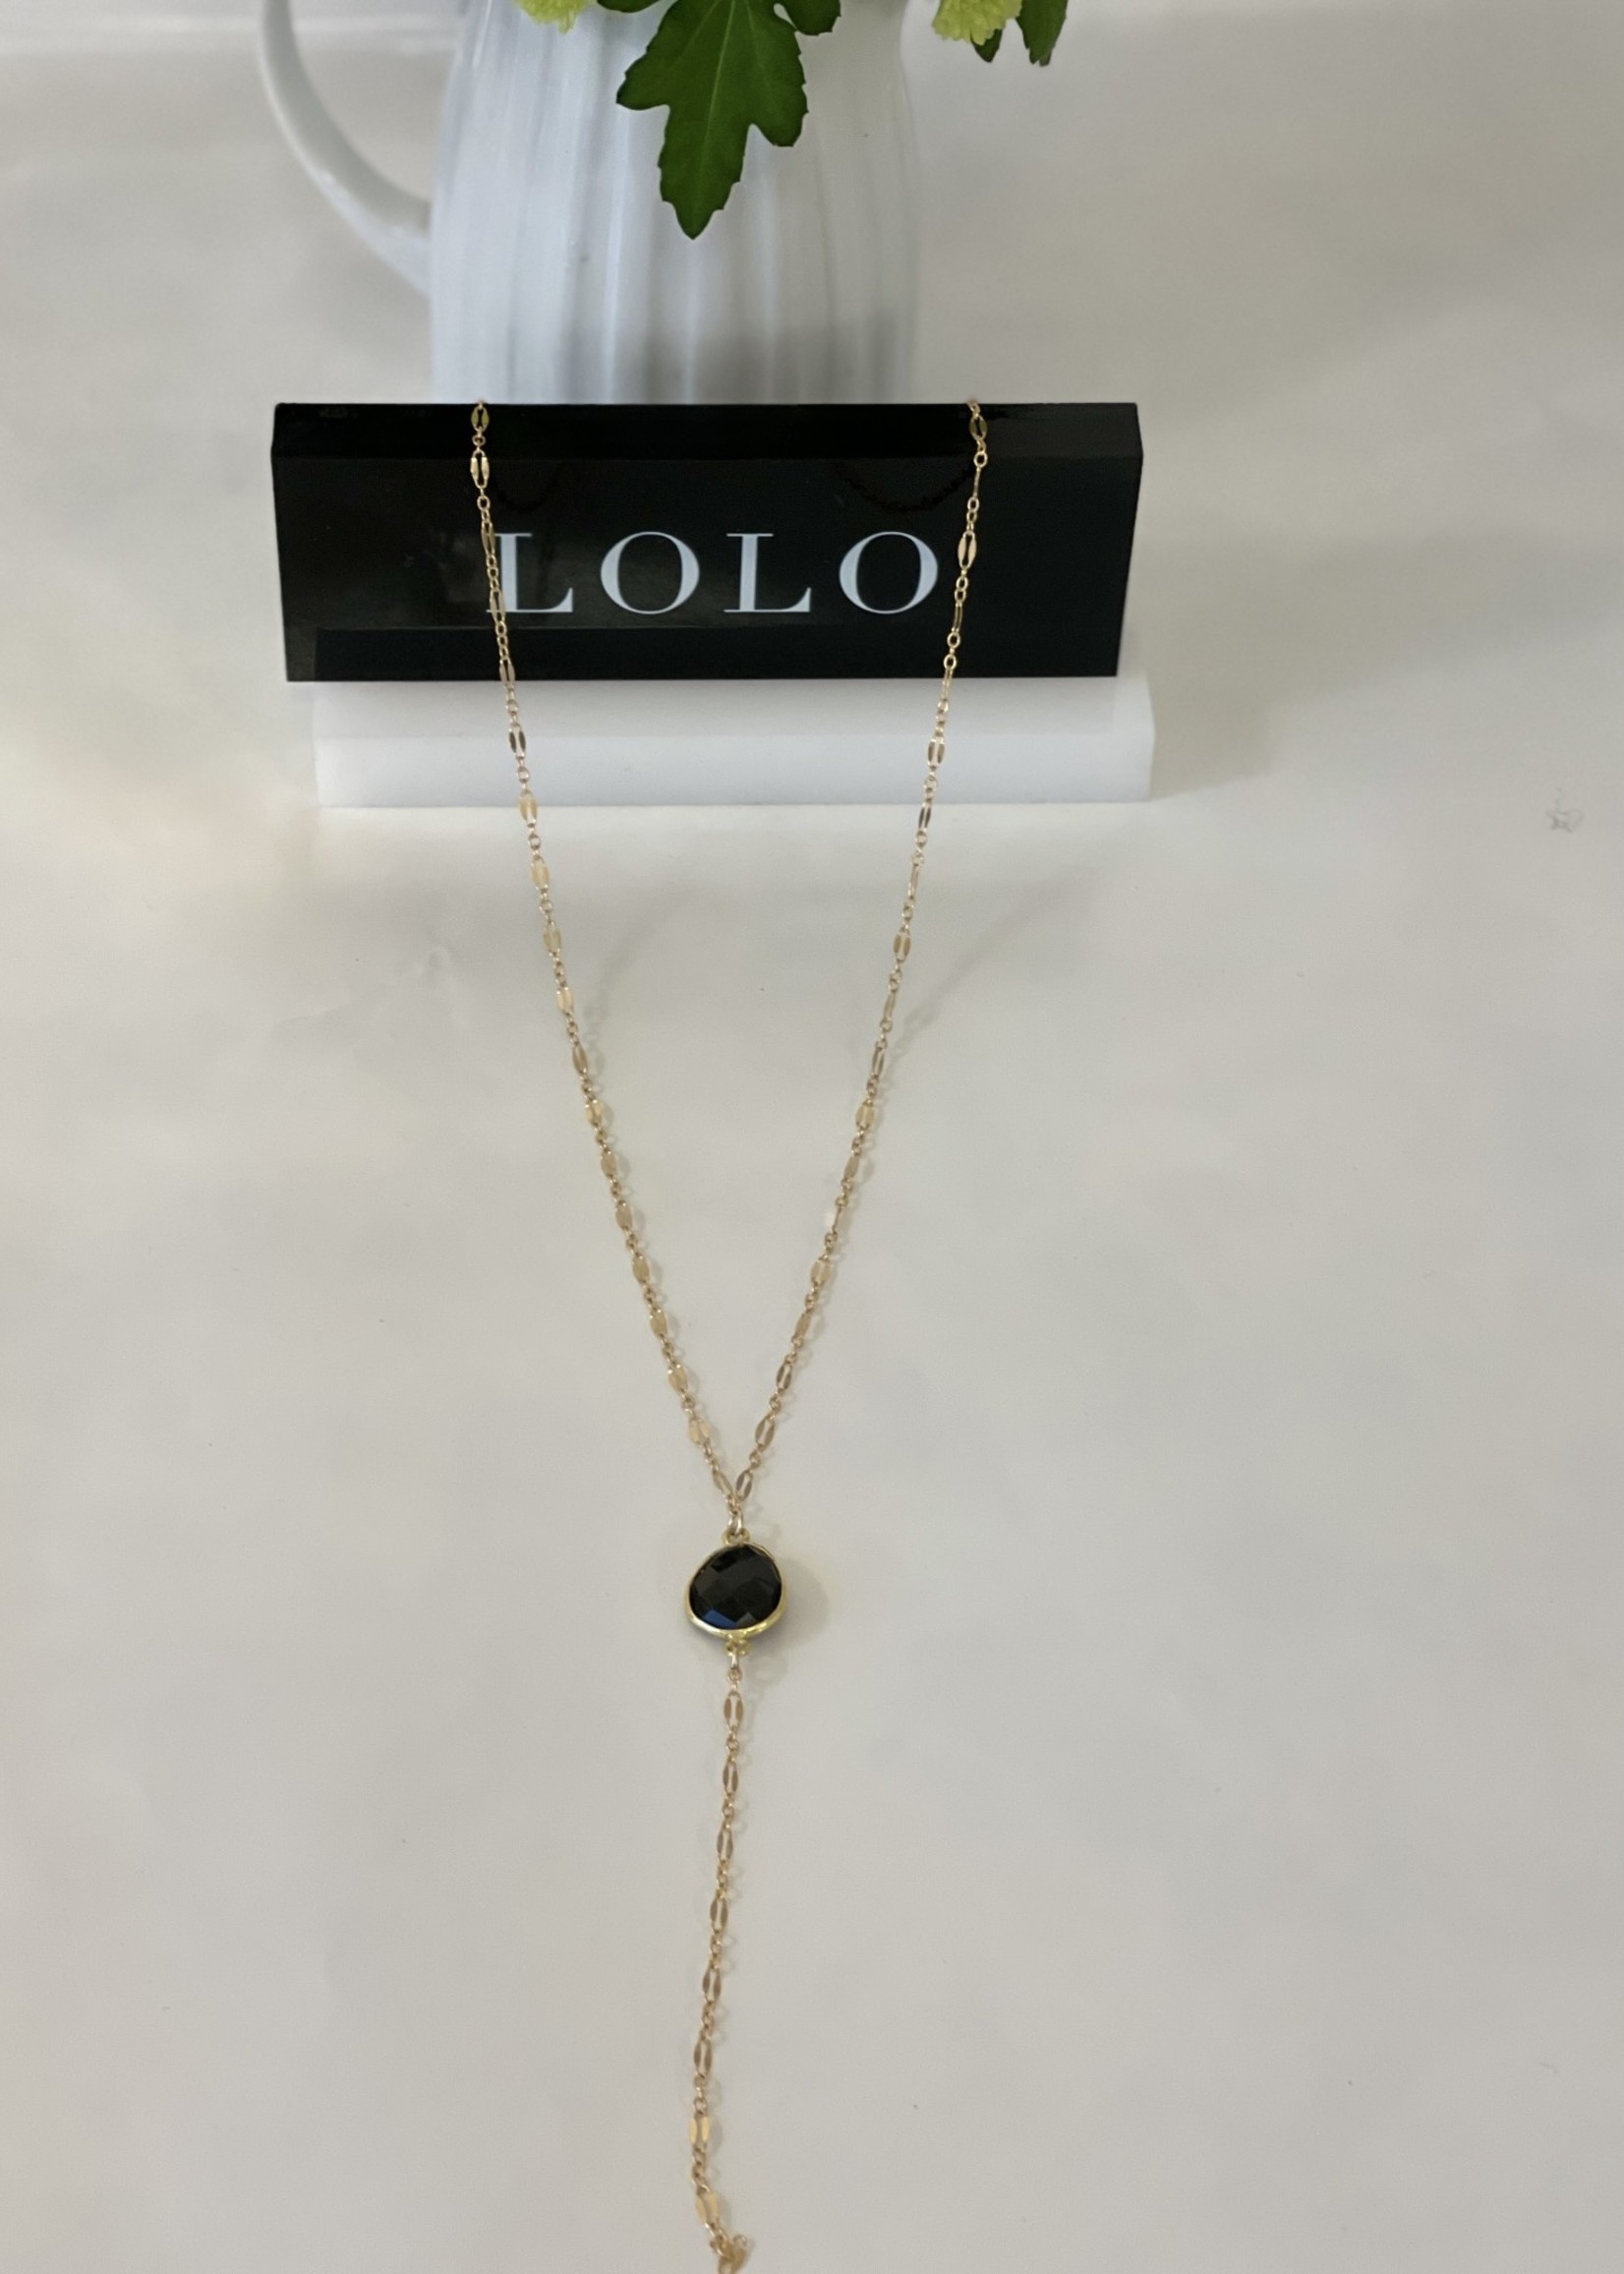 Lolo LOLO Lariat Necklace - Black Onyx